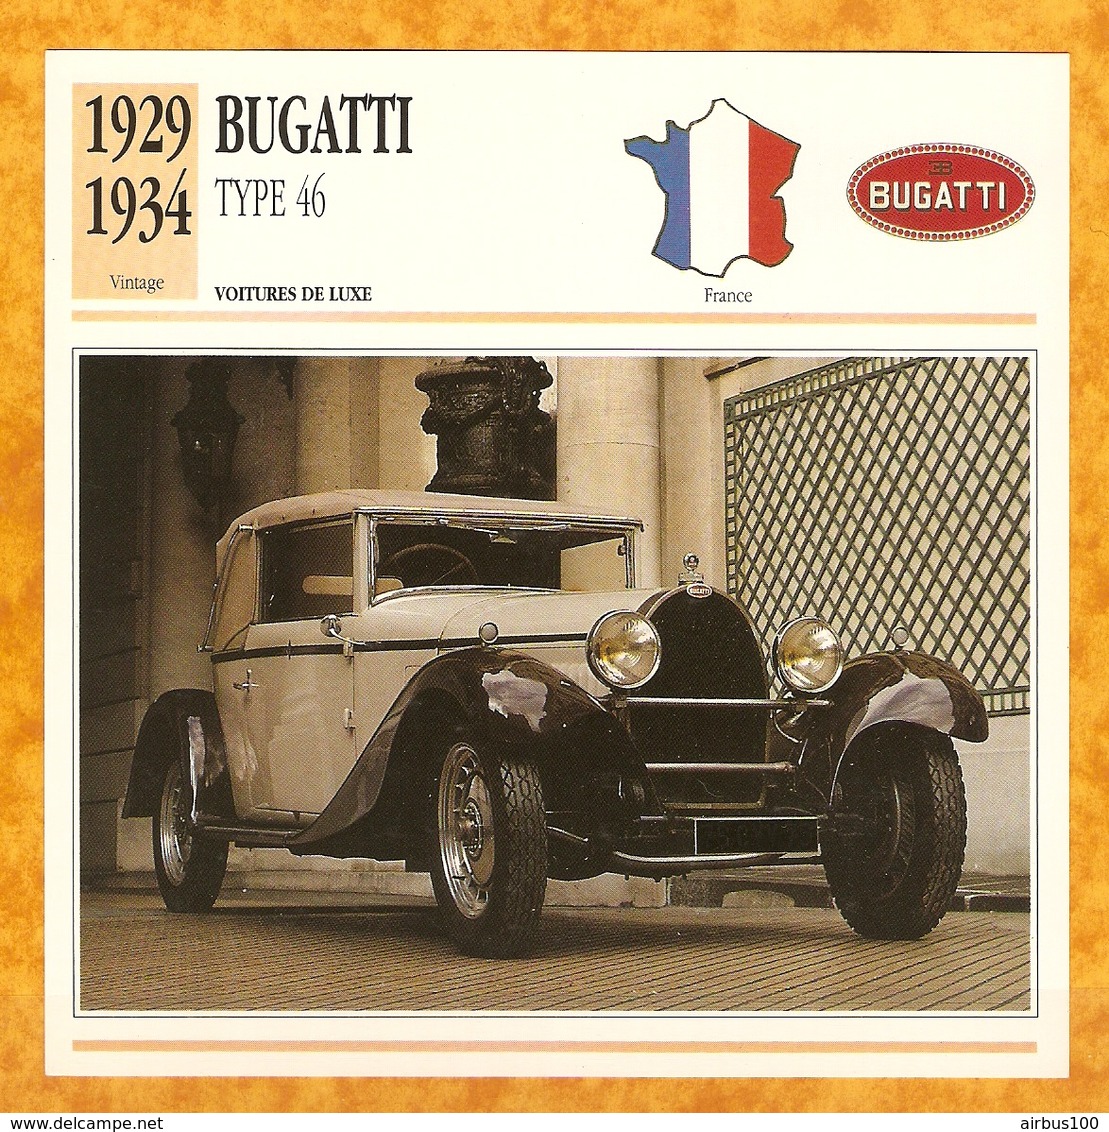 1929 FRANCE VIEILLE VOITURE BUGATTI TYPE 46 - FRANCE OLD CAR - FRANCIA VIEJO COCHE - VECCHIA MACCHINA - Voitures